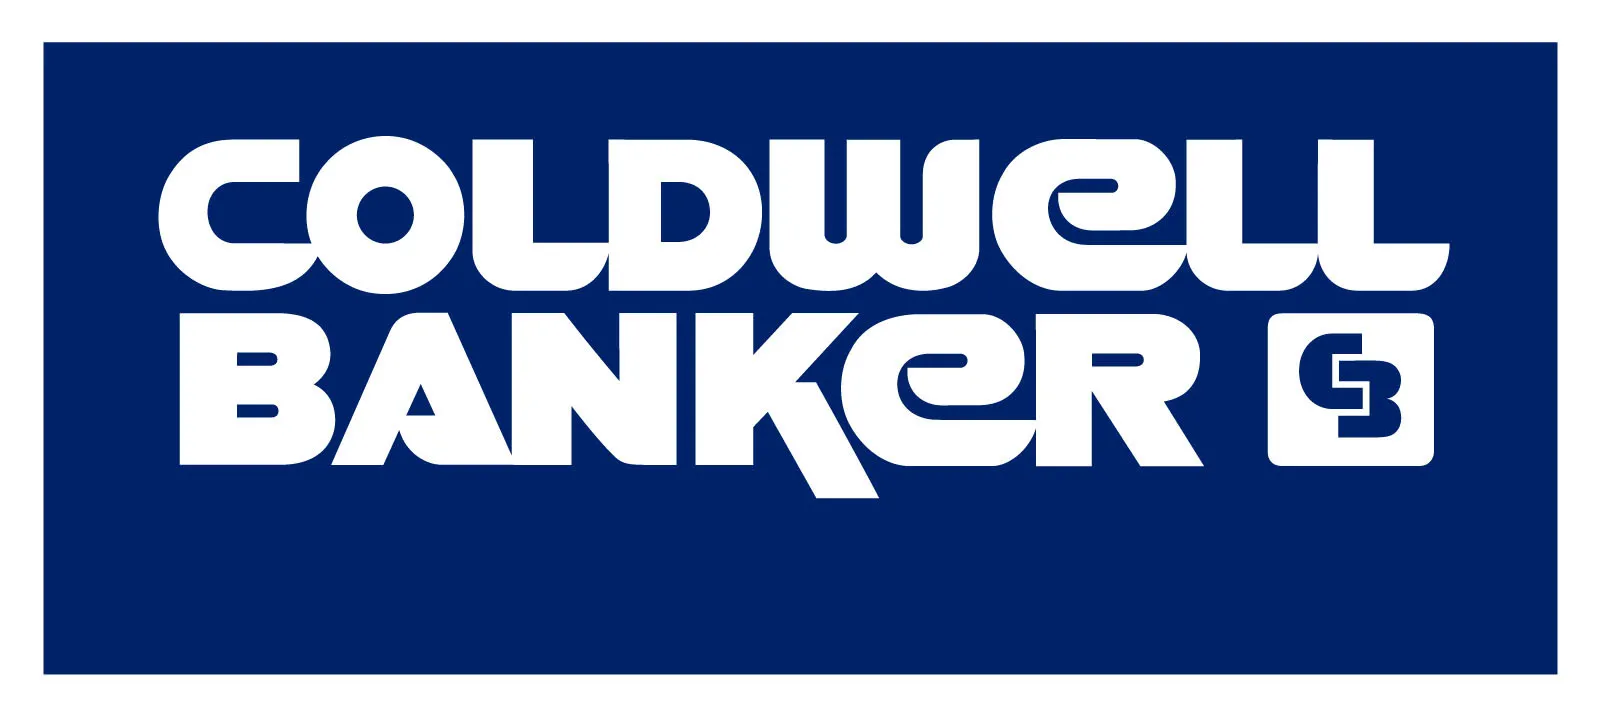 Coldwell Banker Real Estate logo